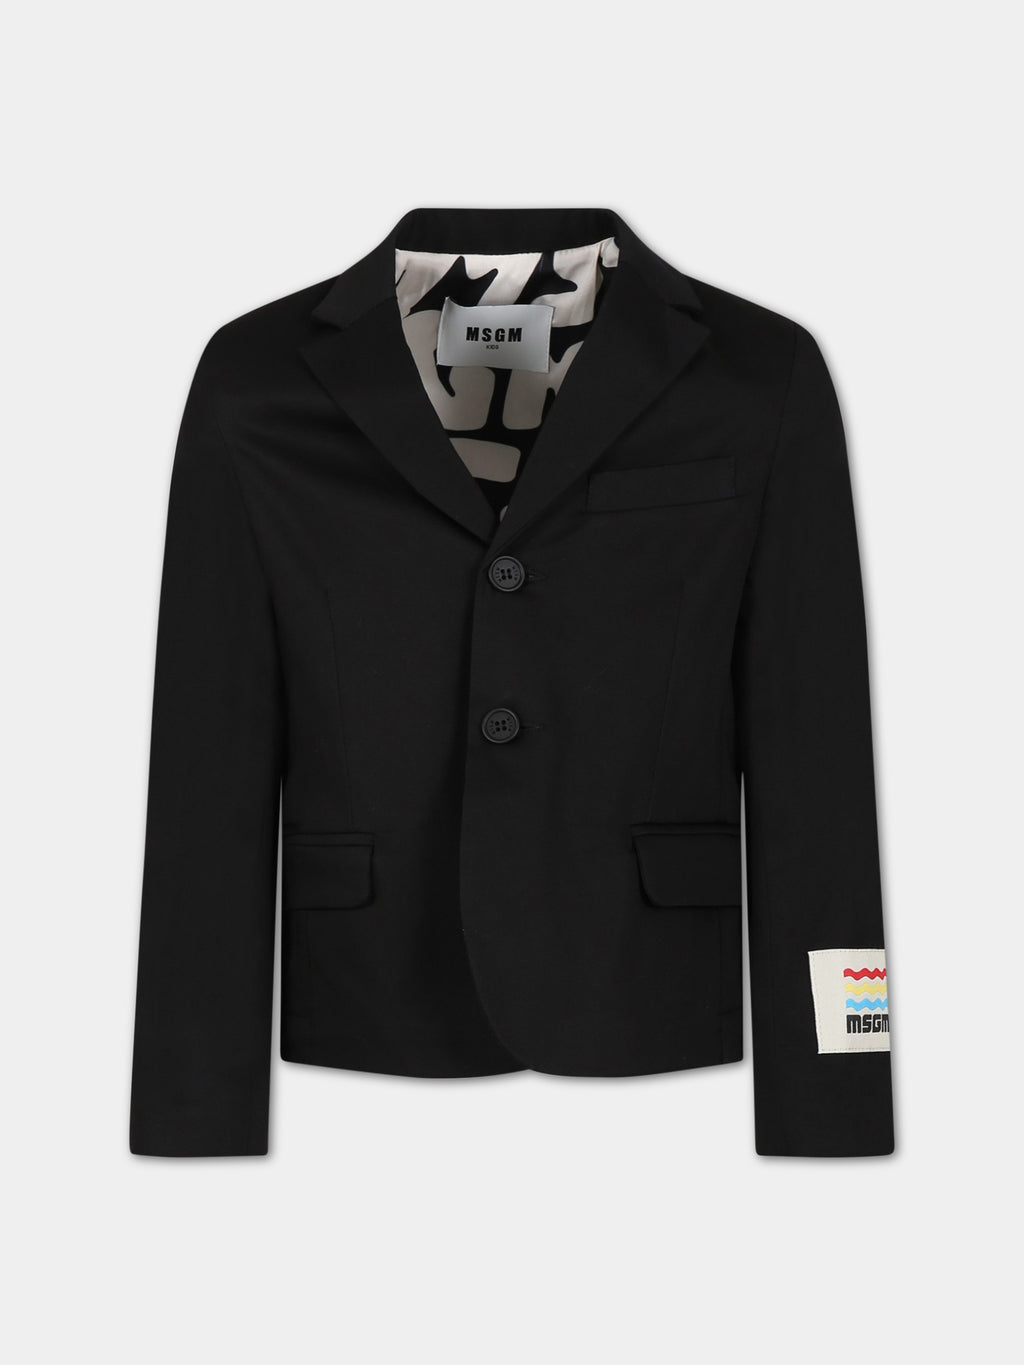 Black jacket for boy with logo